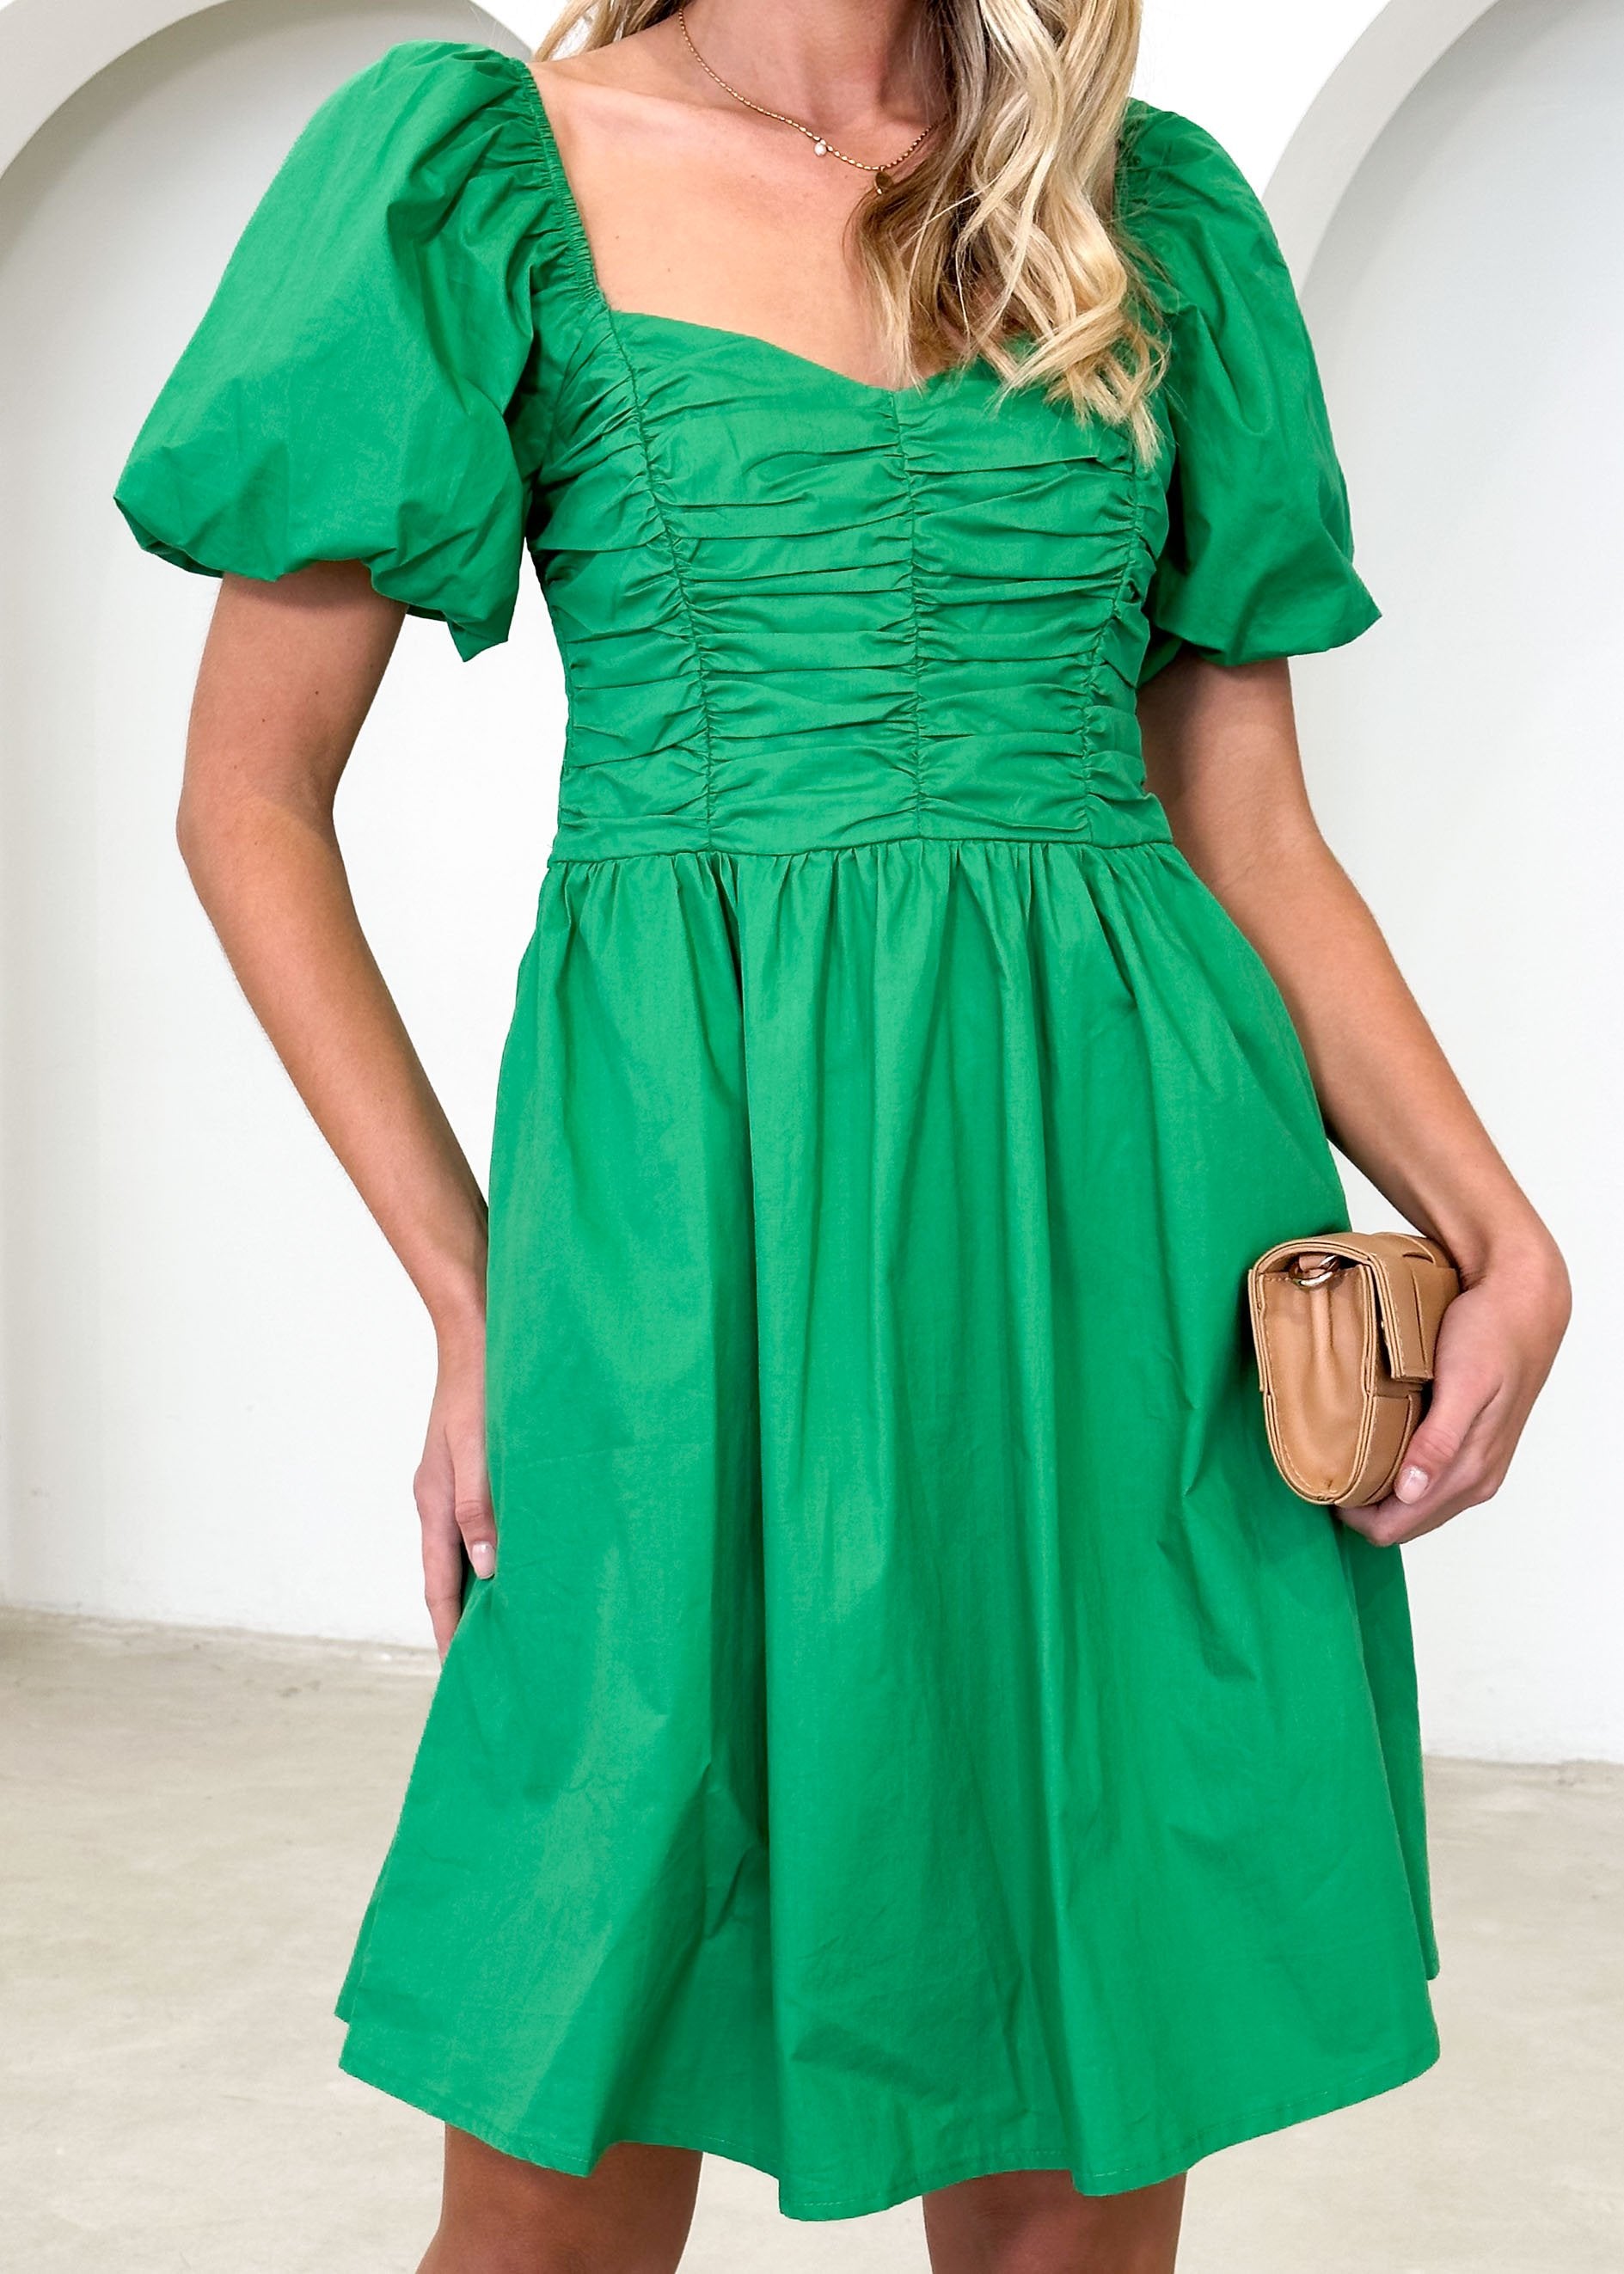 Singh Dress - Green